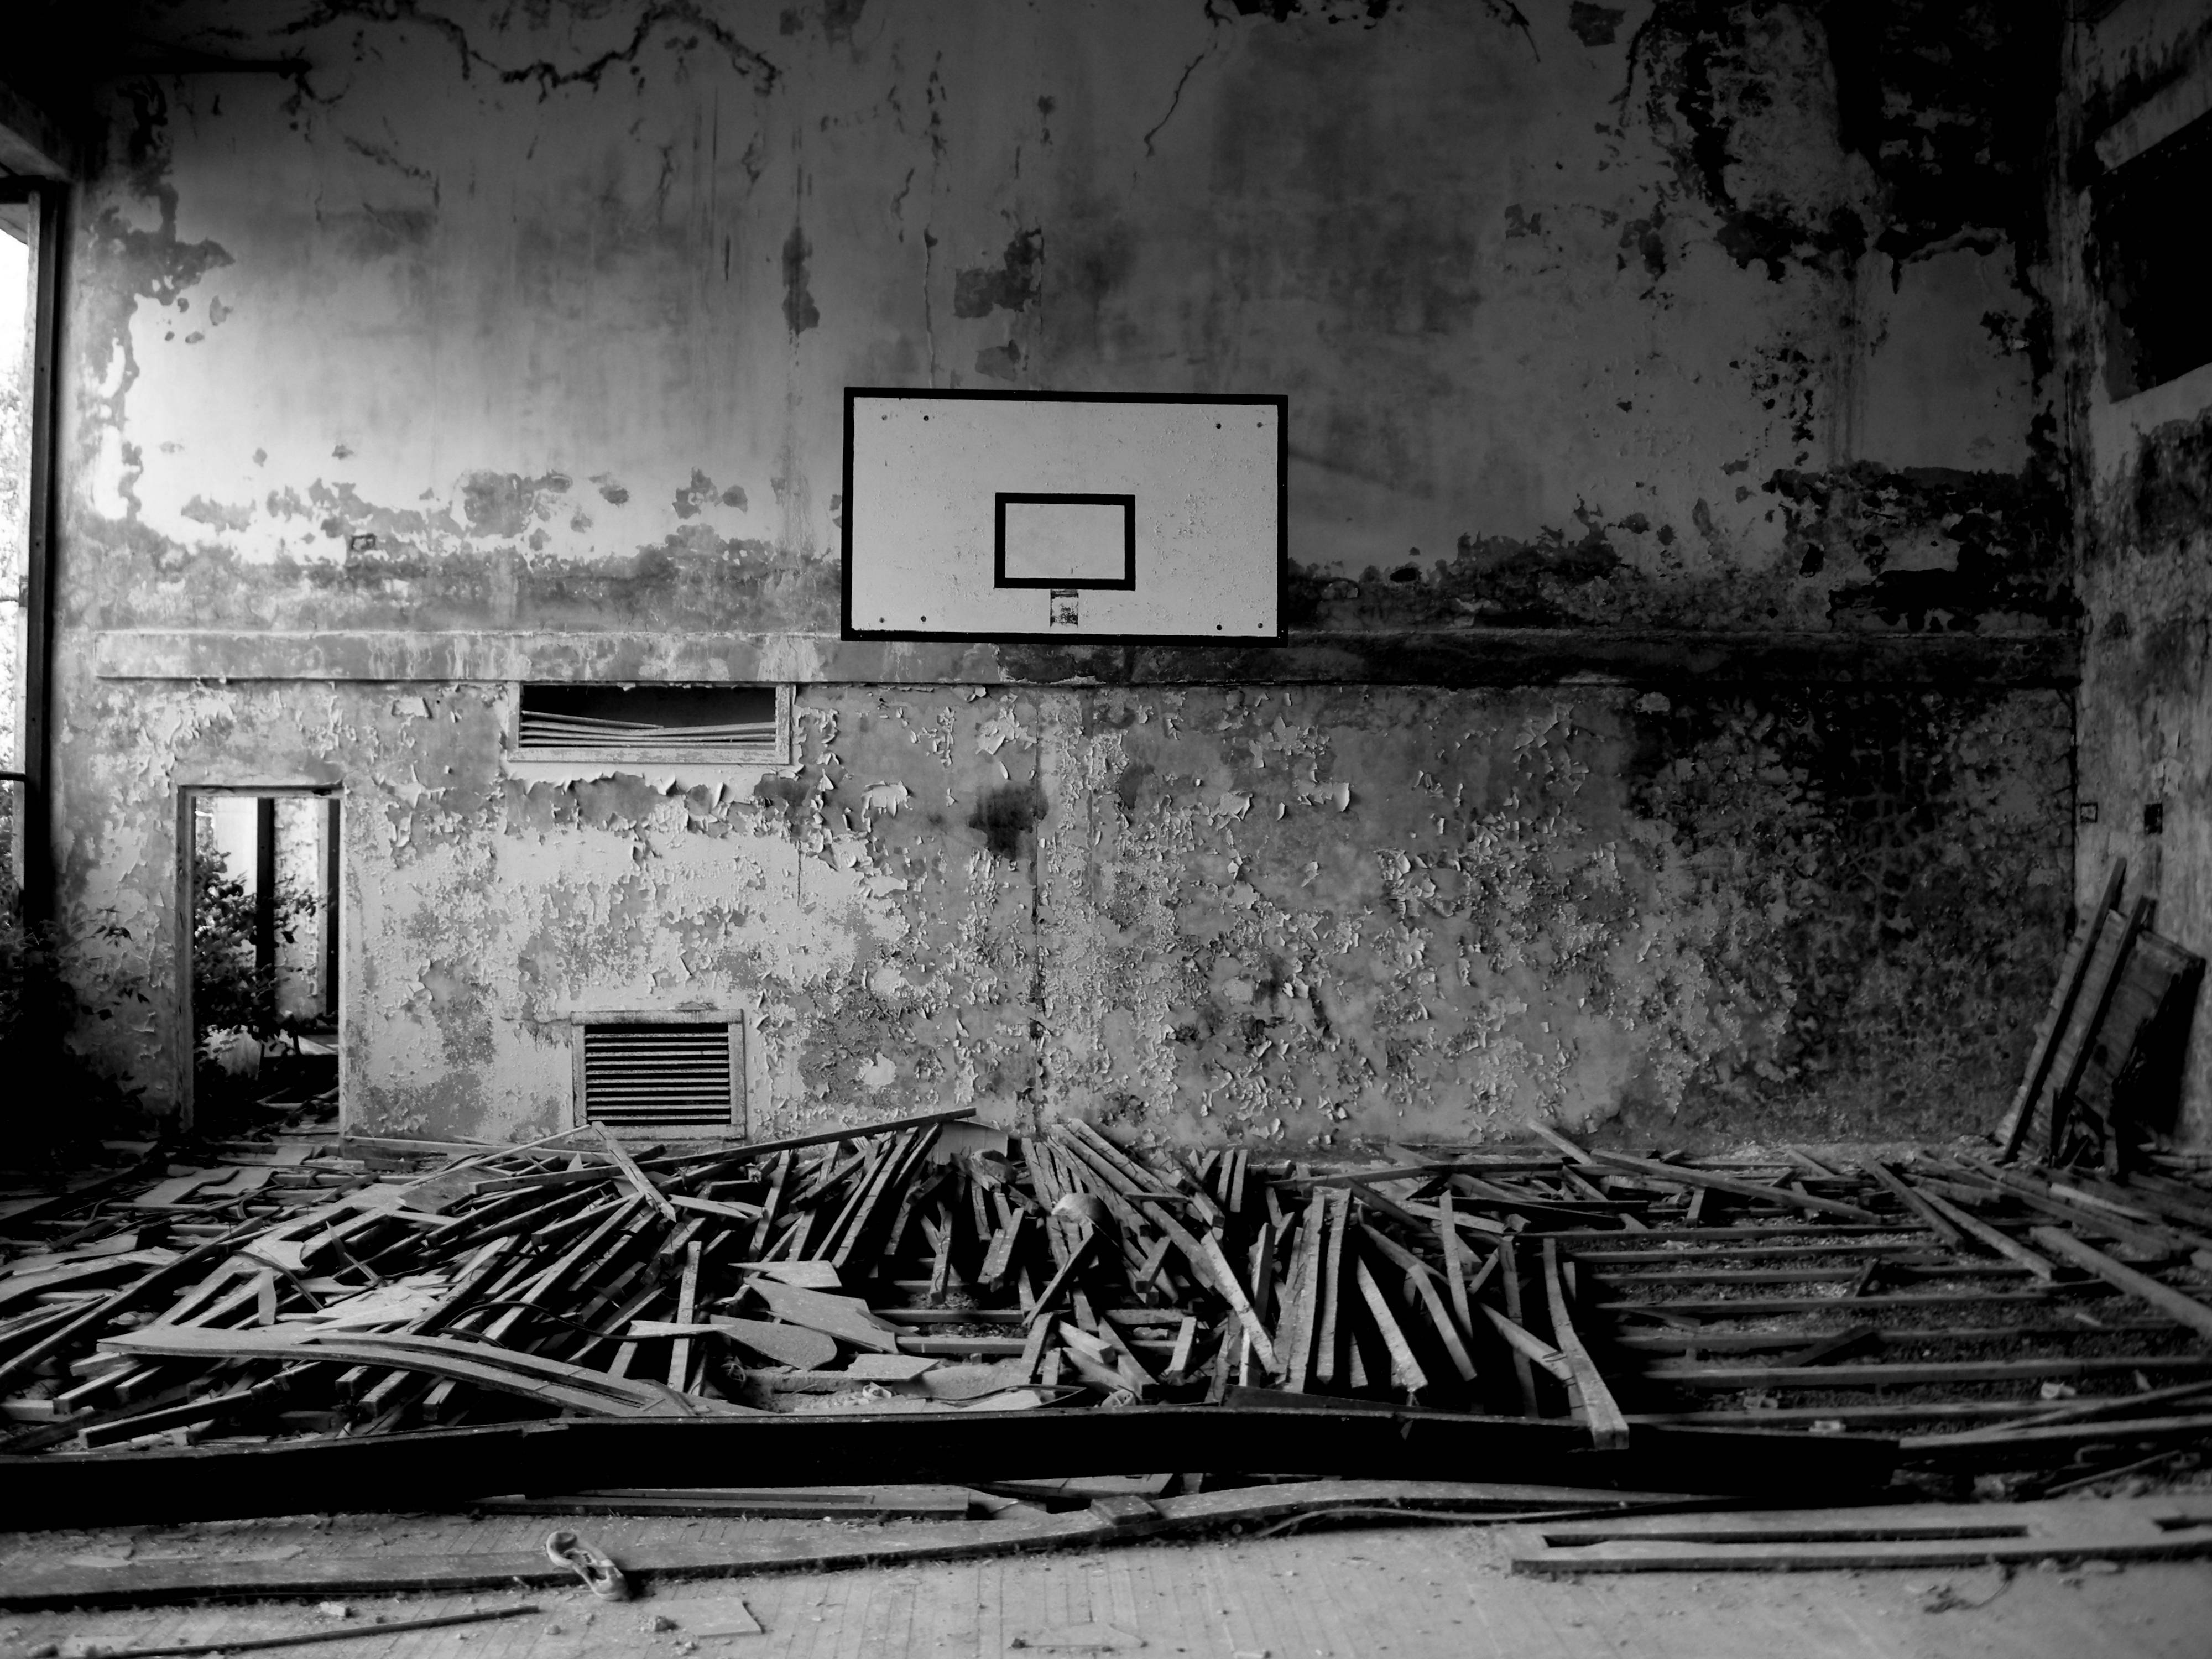 Basketball Court Wallpapers Wallpaper Cave